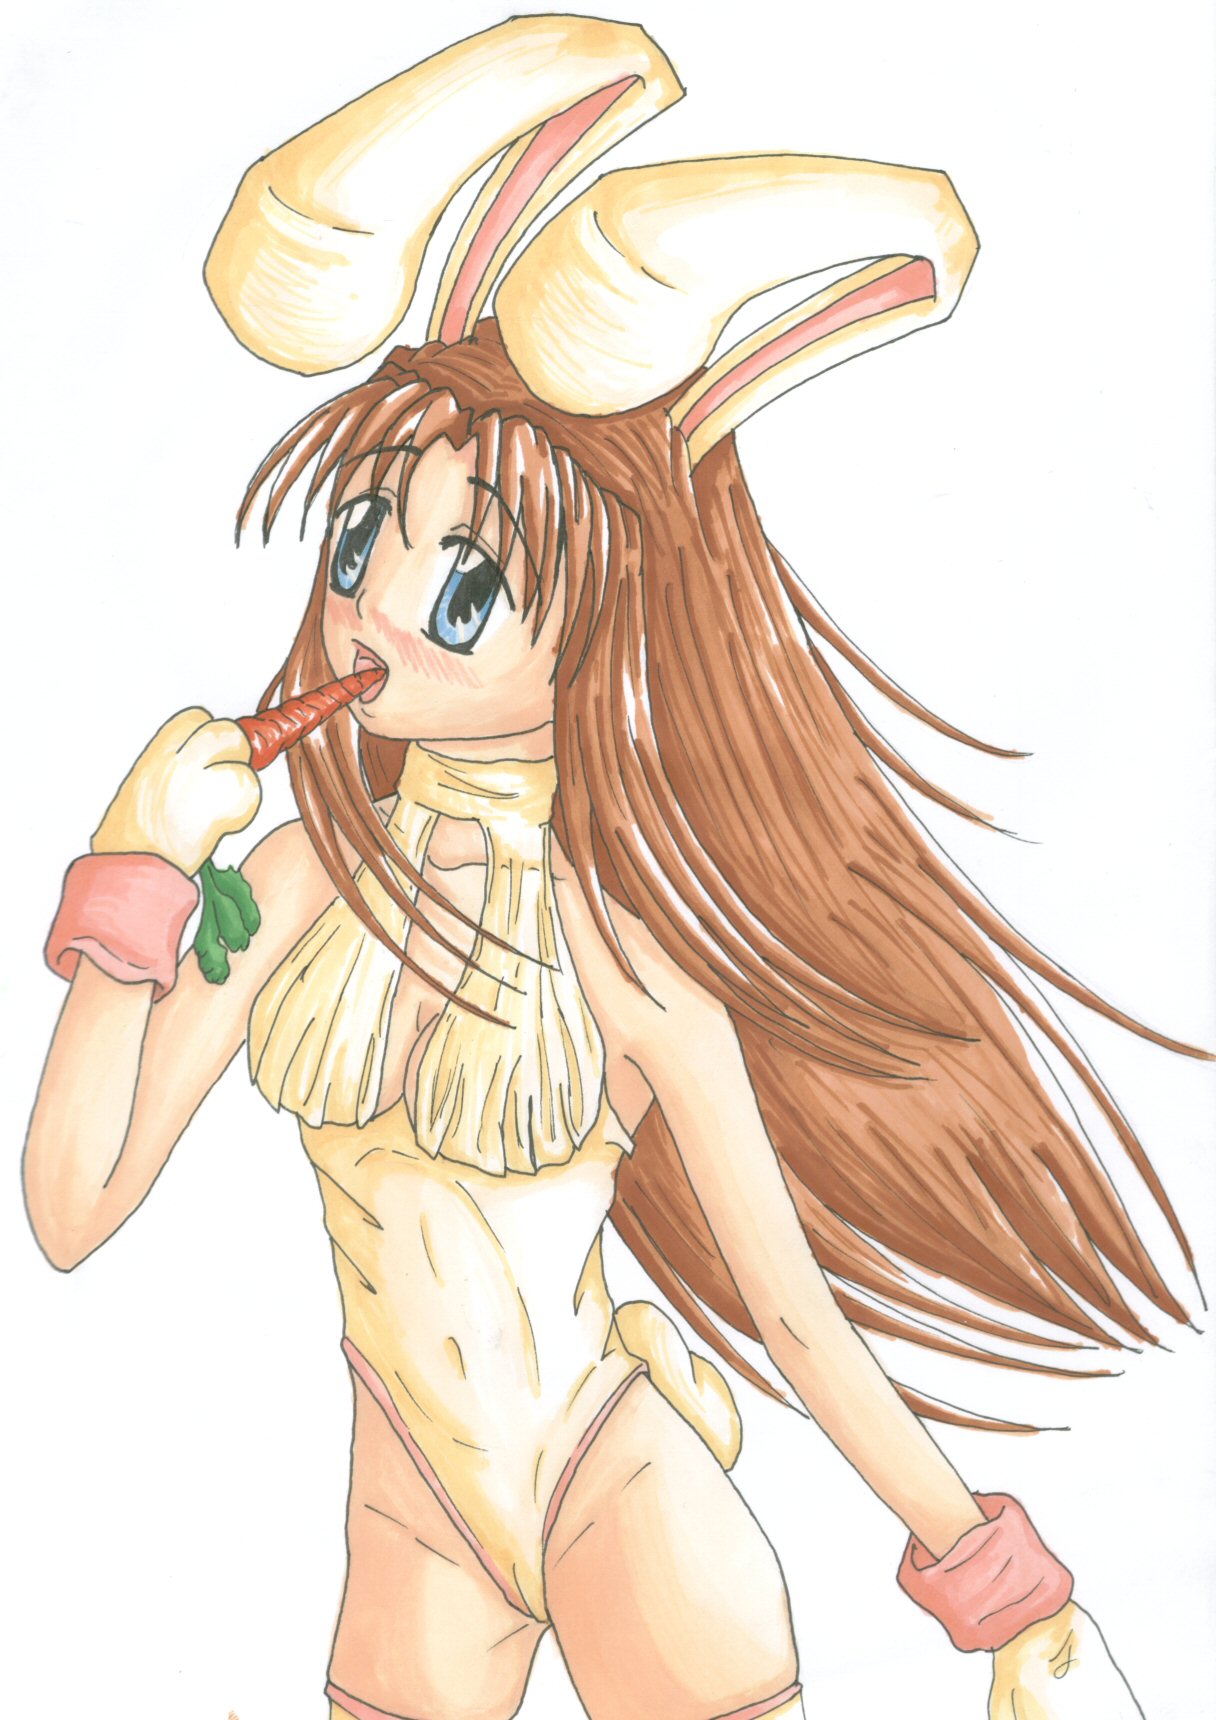 Bunny Girl by Lau_Chan